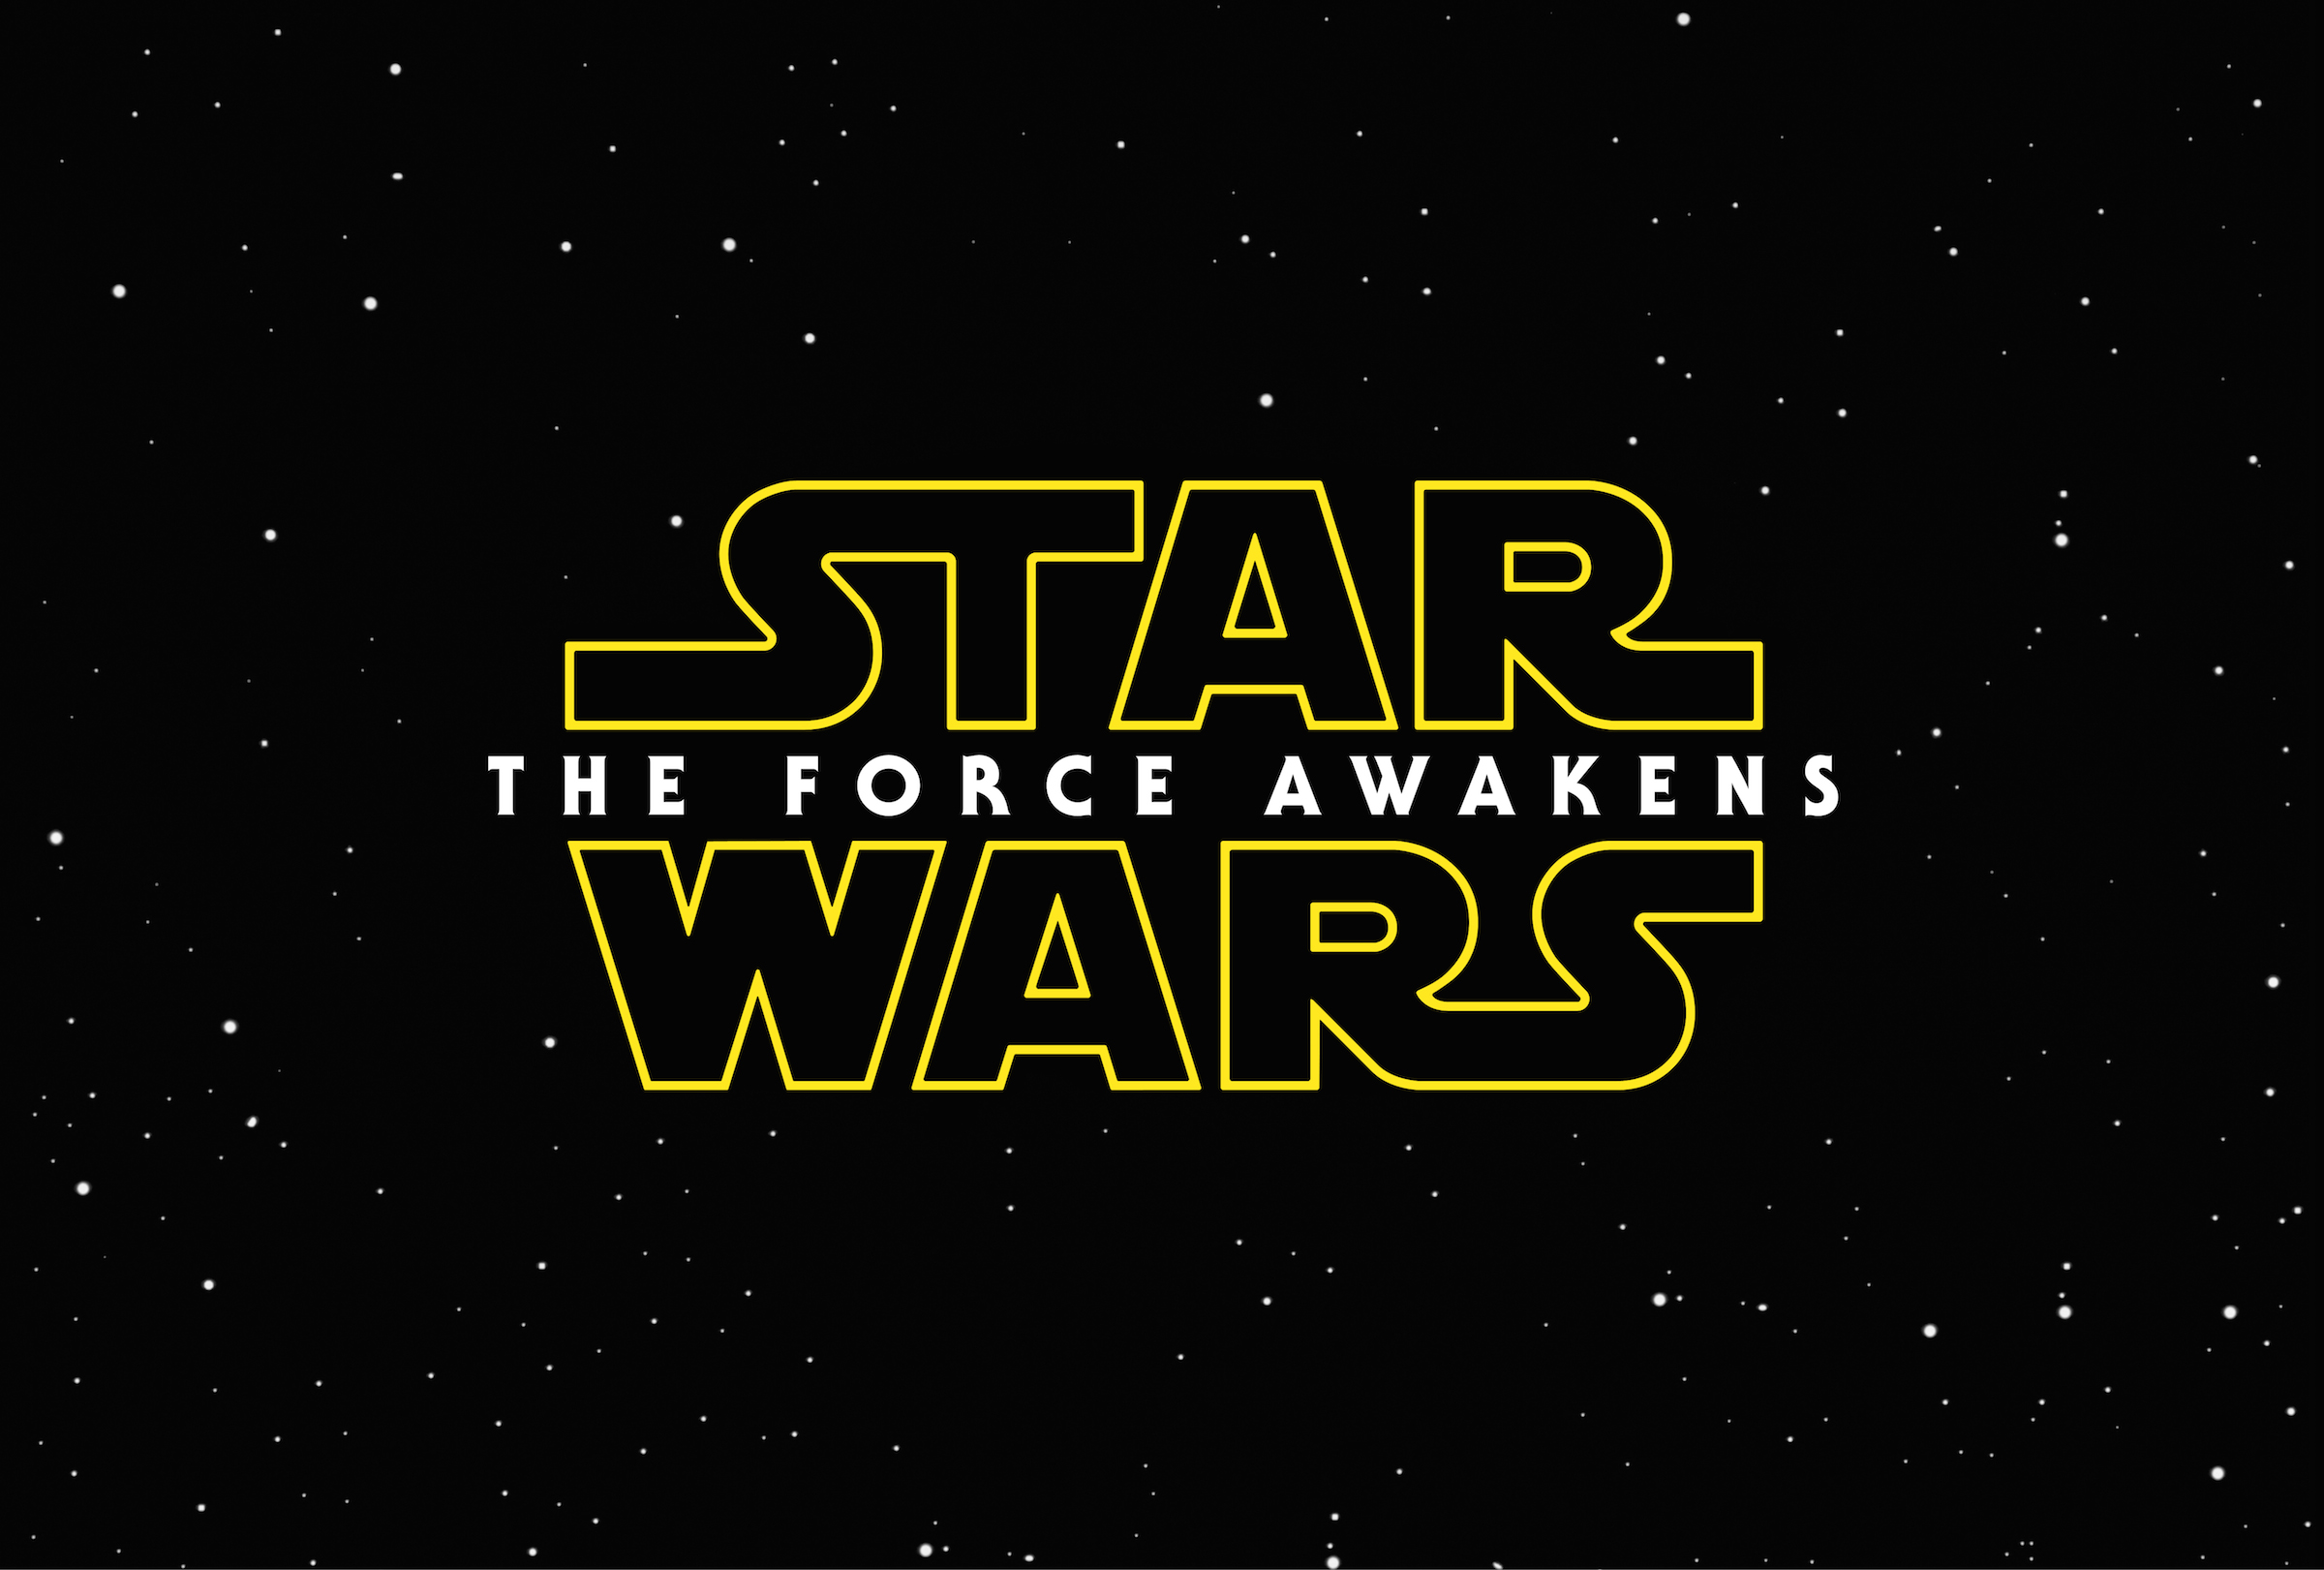 Star Wars The Force Awakens photo